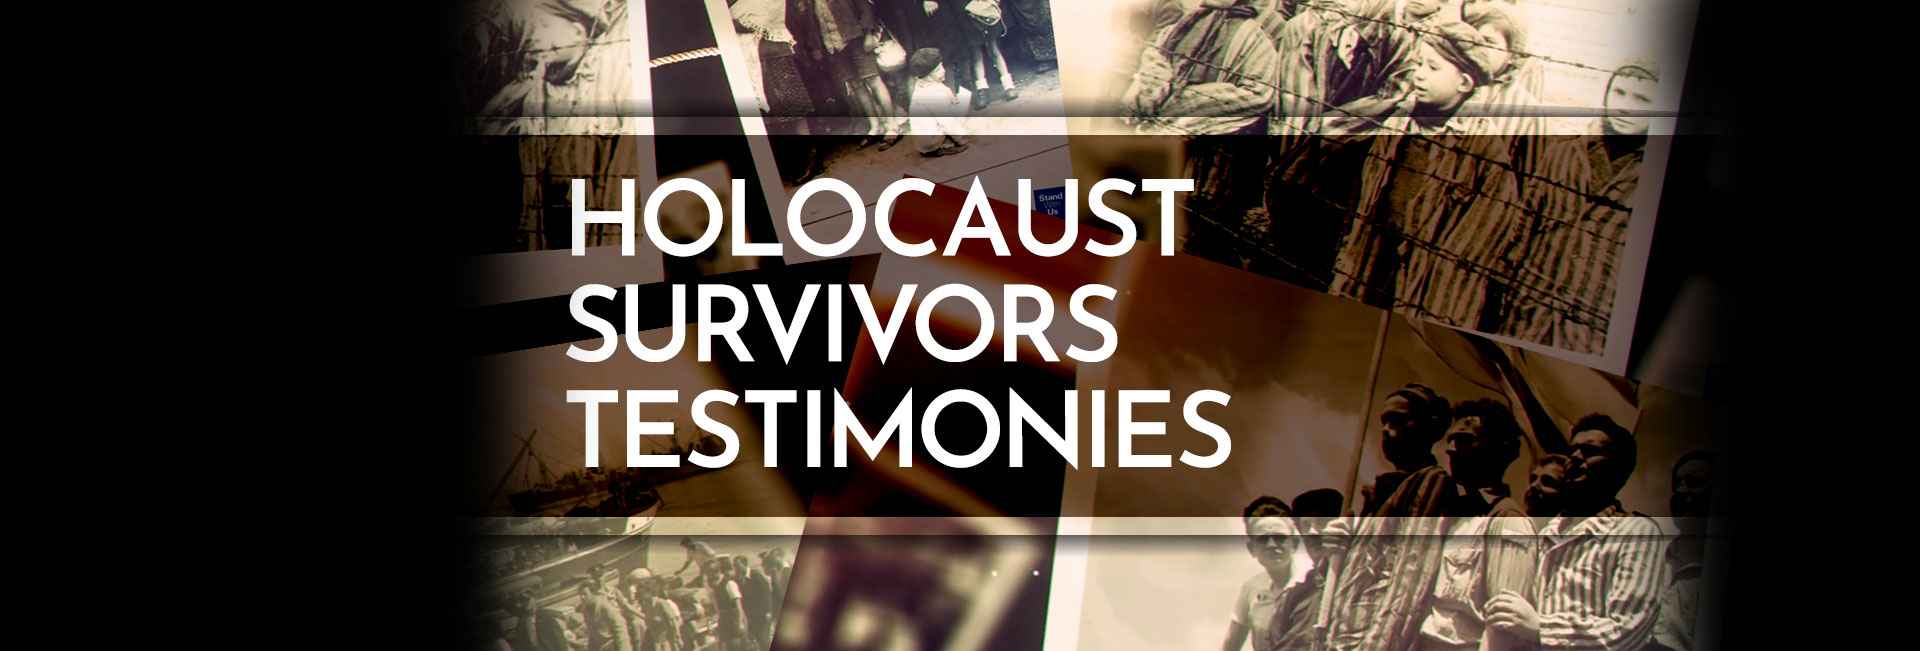 Holocaust Survivors Testimonies: Alice Schoenfeld